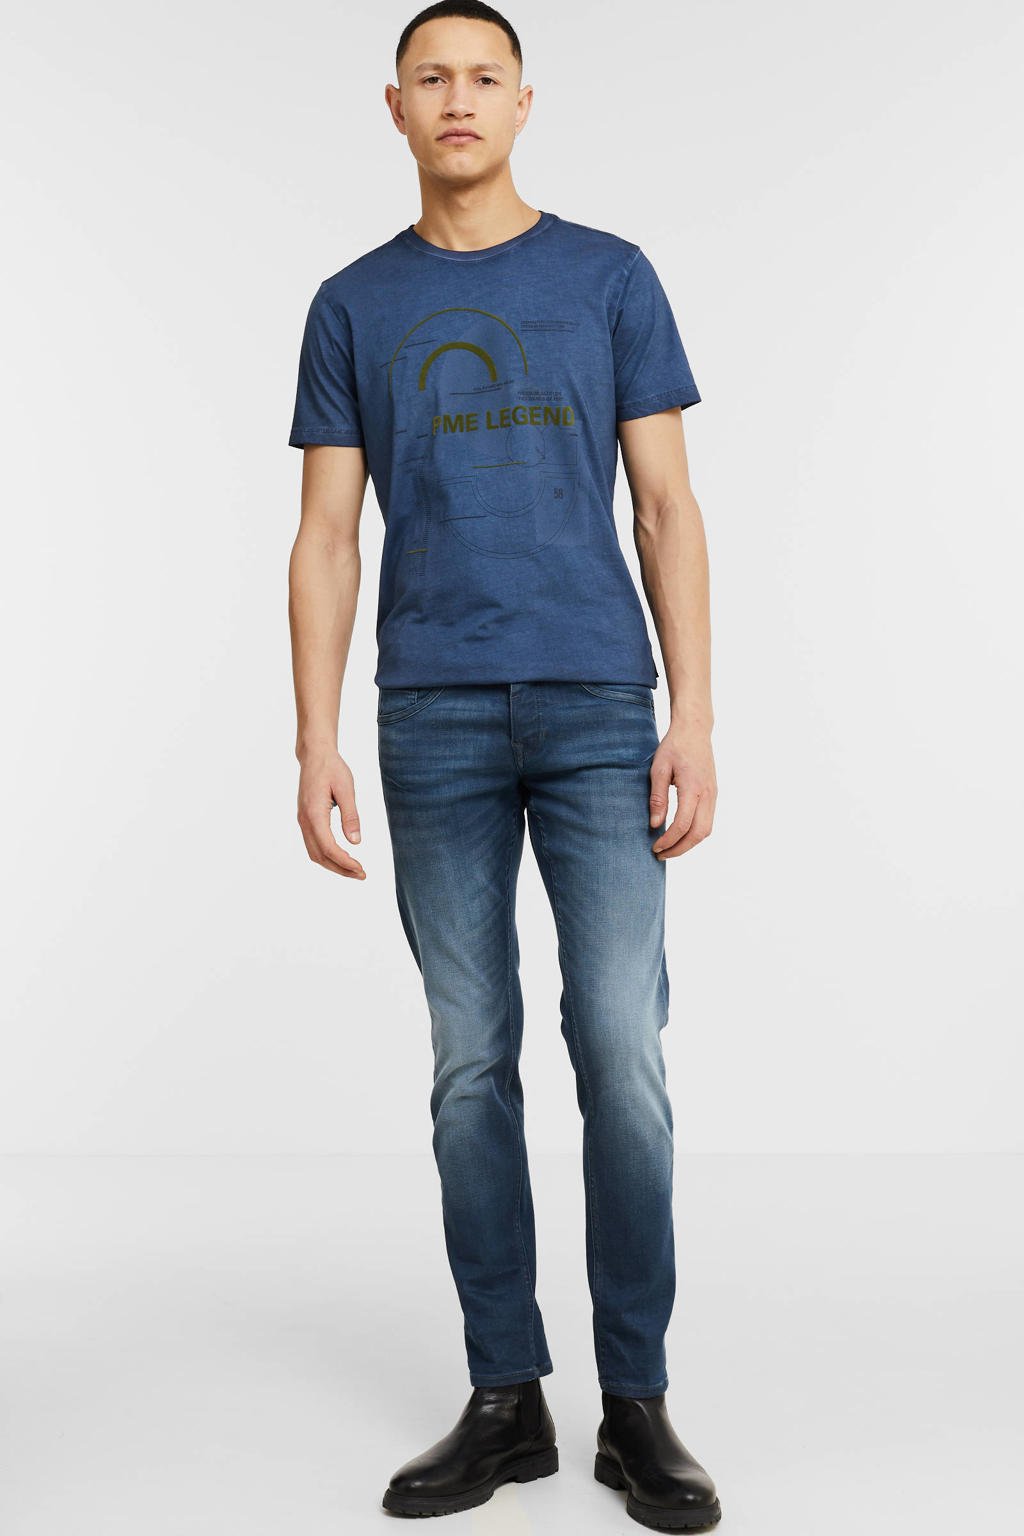 PME Legend regular straight fit jeans Skyhawk mid grey blue